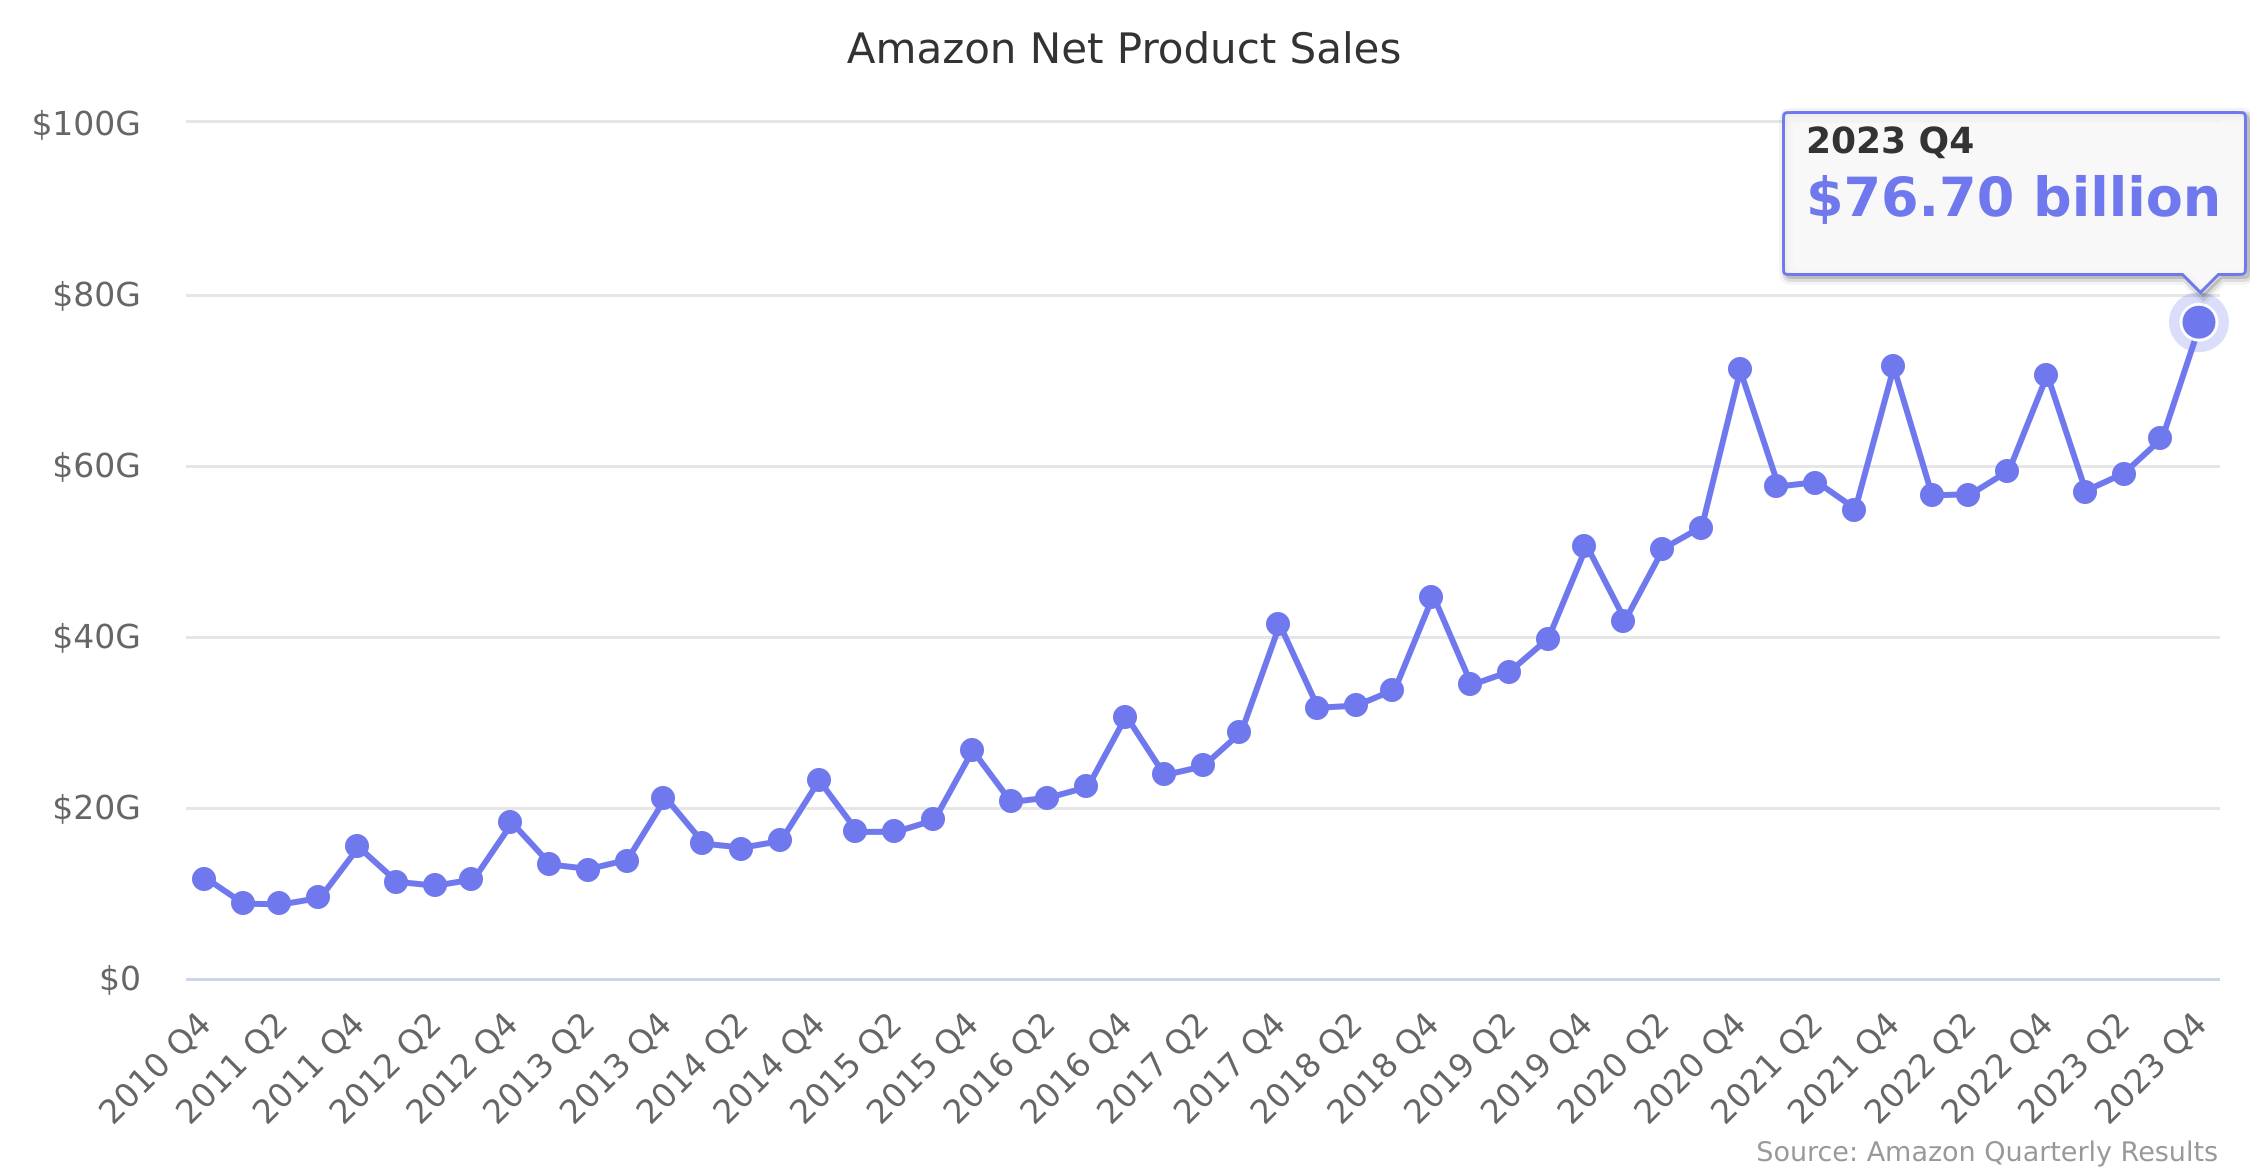 Amazon Net Product Sales 2010-2023